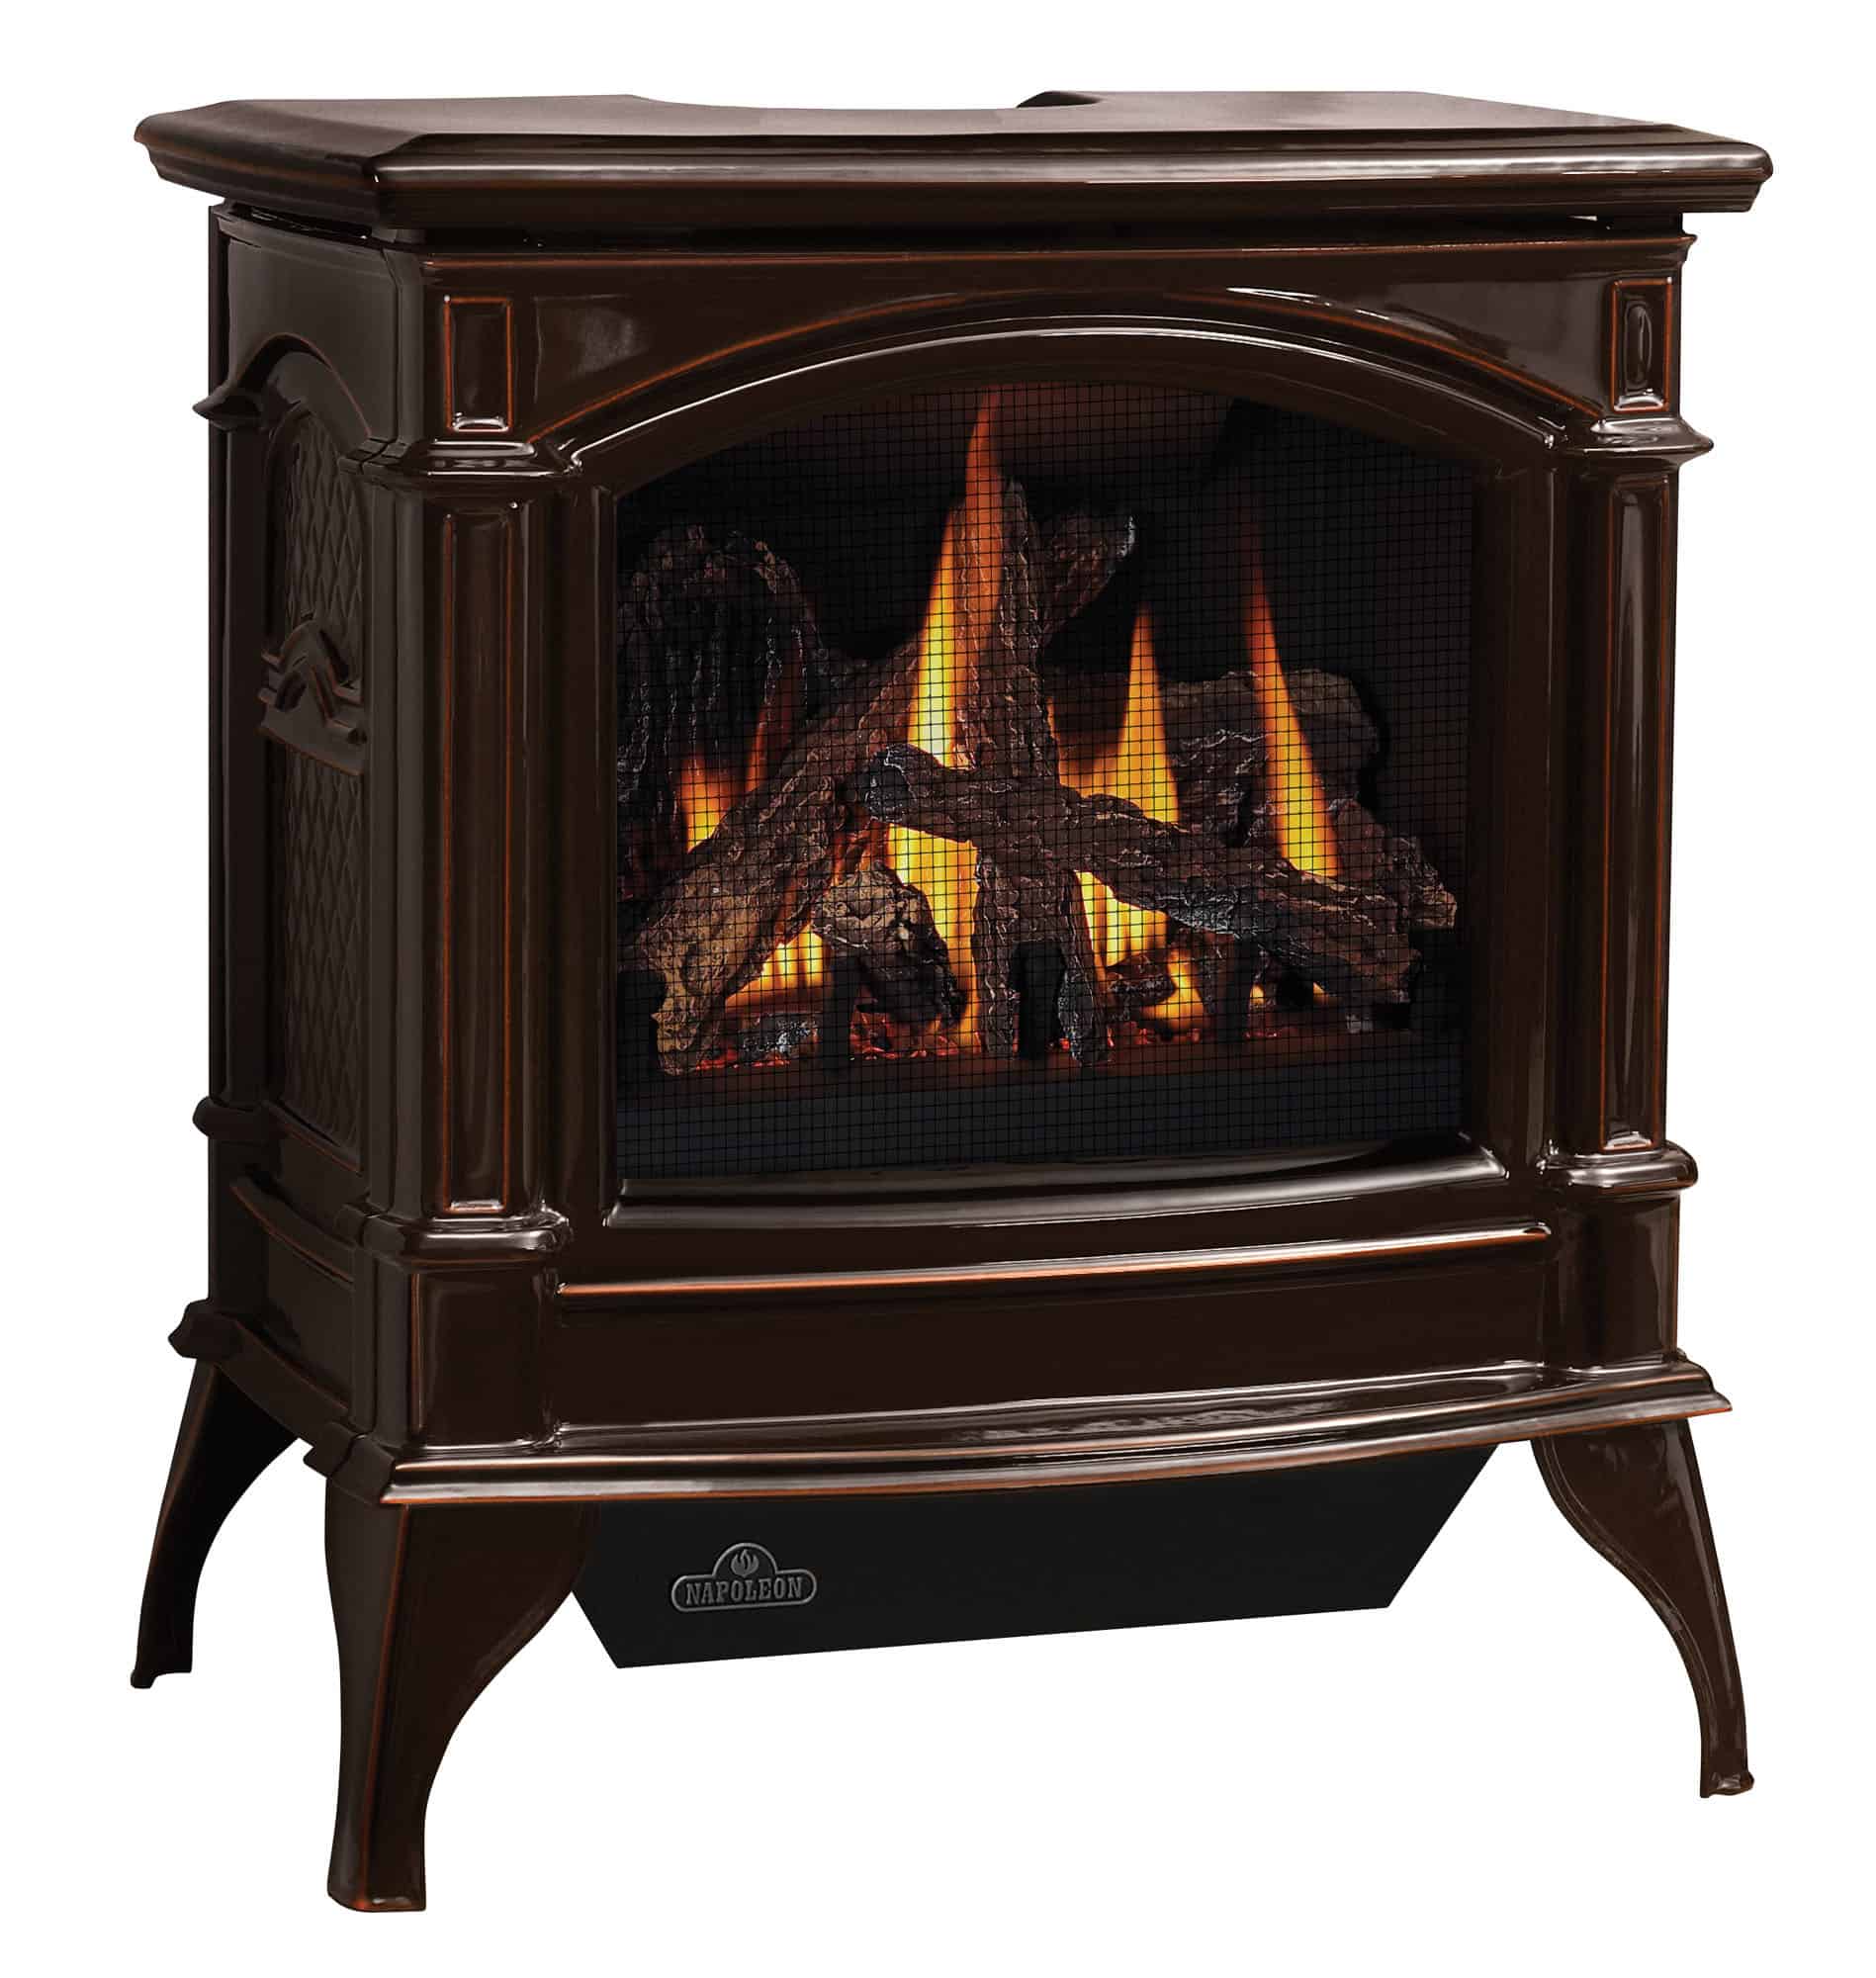 napoleon-gvfs60-1-30-000-btu-vent-free-cast-iron-gas-stove